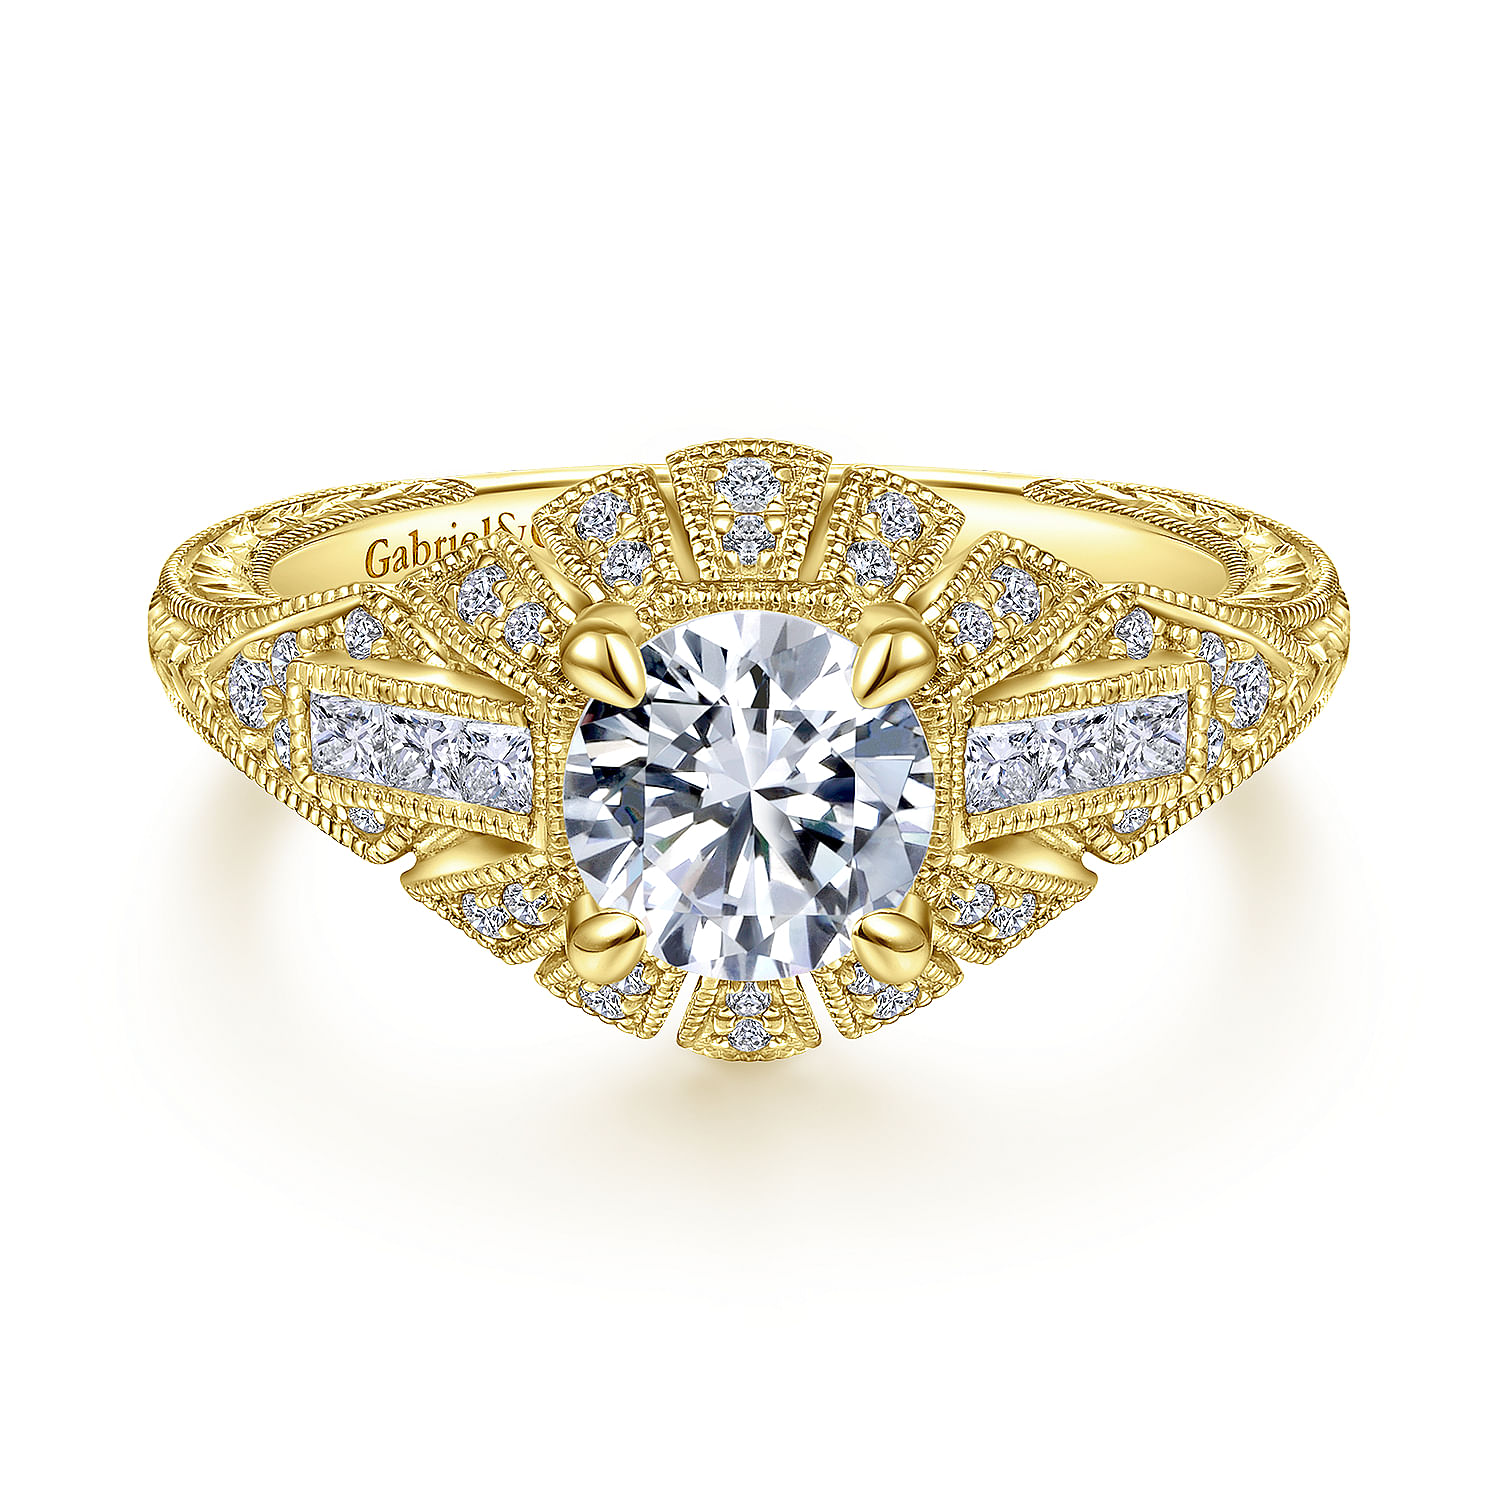 Carter - Vintage Inspired 14K Yellow Gold Round Diamond Engagement Ring